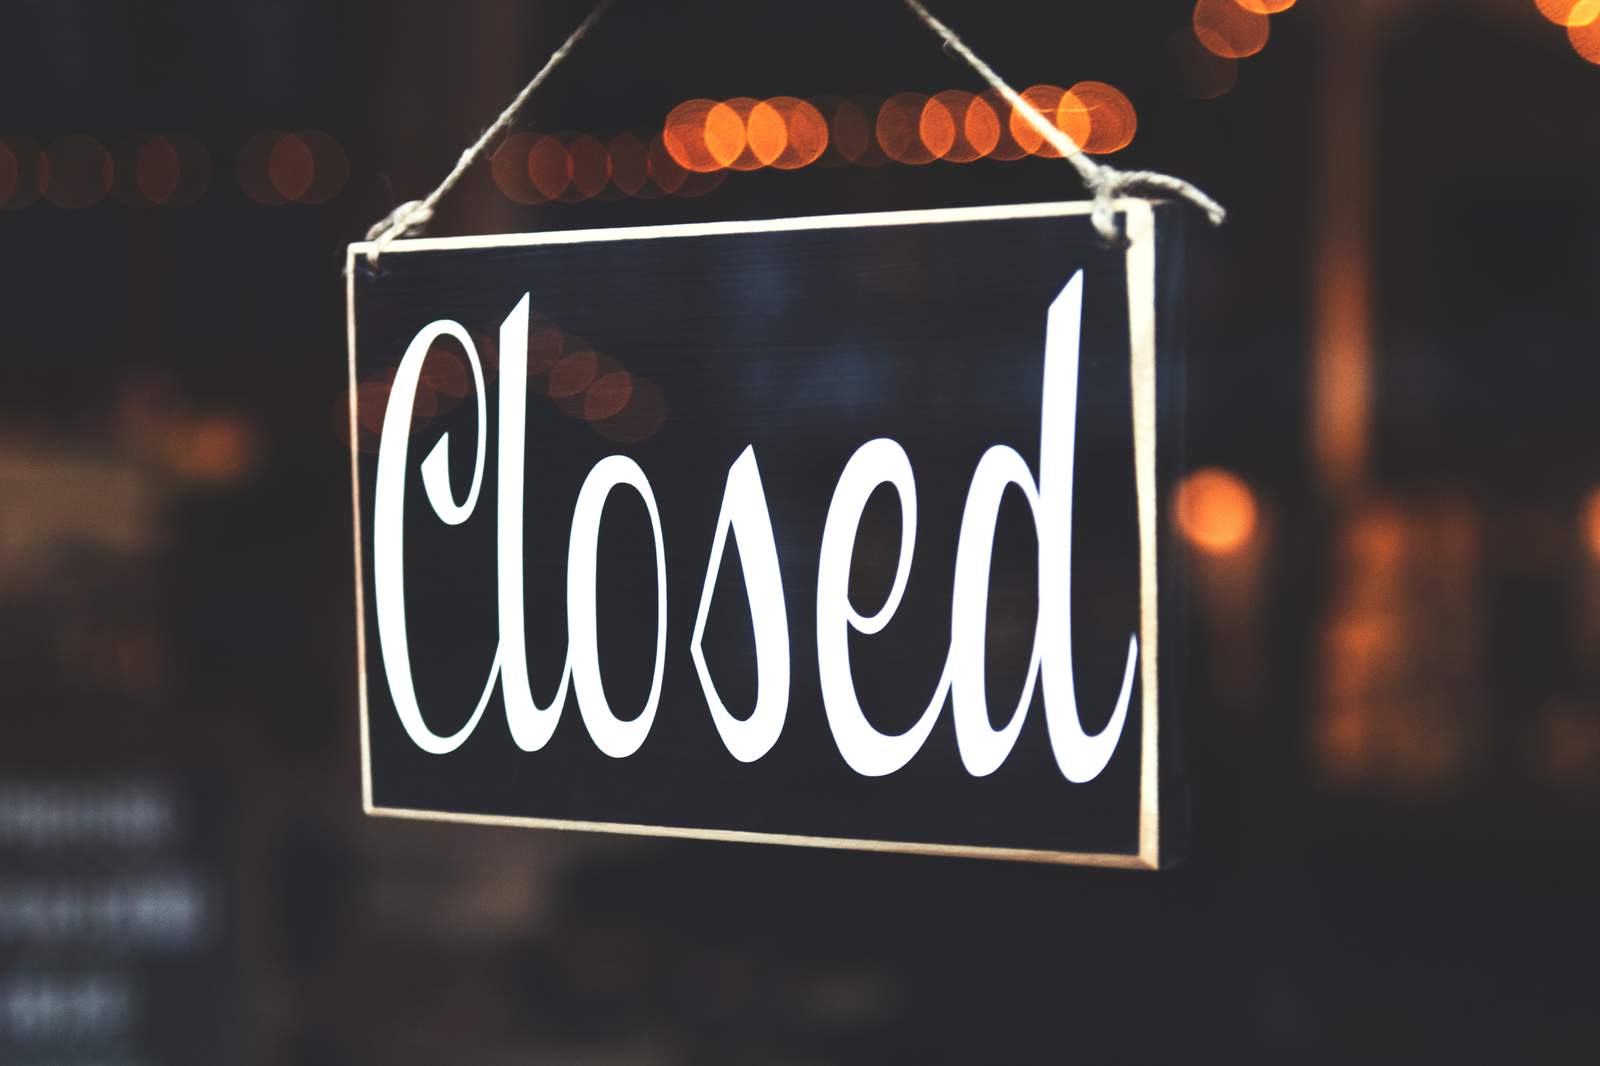 List of Brevard restaurants, bars closed due to uptick in coronavirus cases